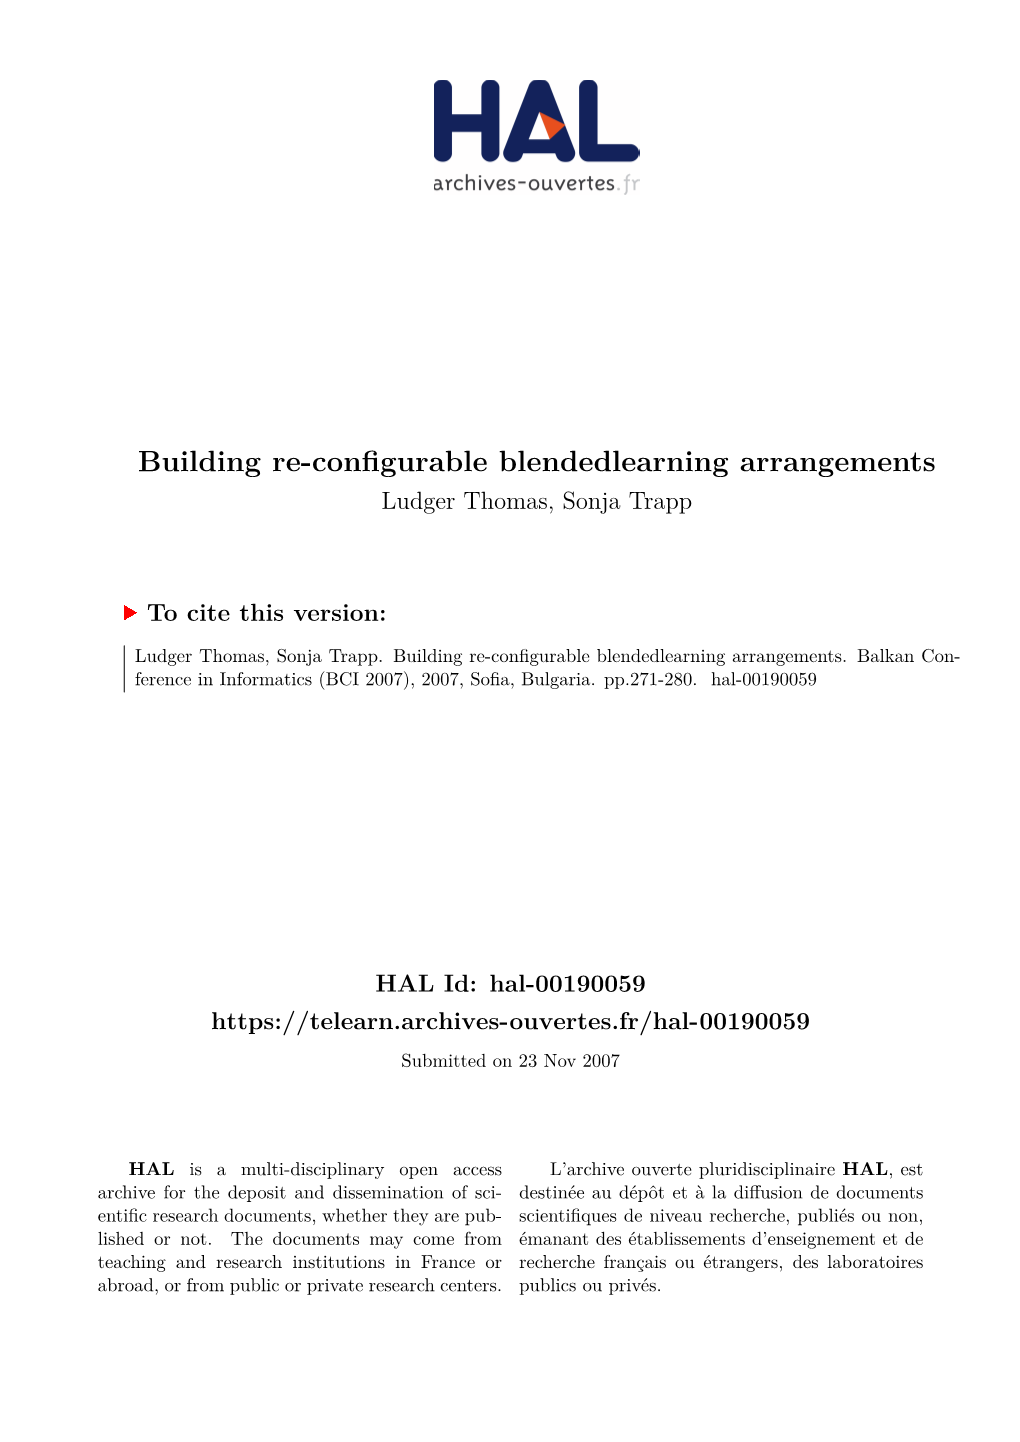 Building Re-Configurable Blendedlearning Arrangements Ludger Thomas, Sonja Trapp